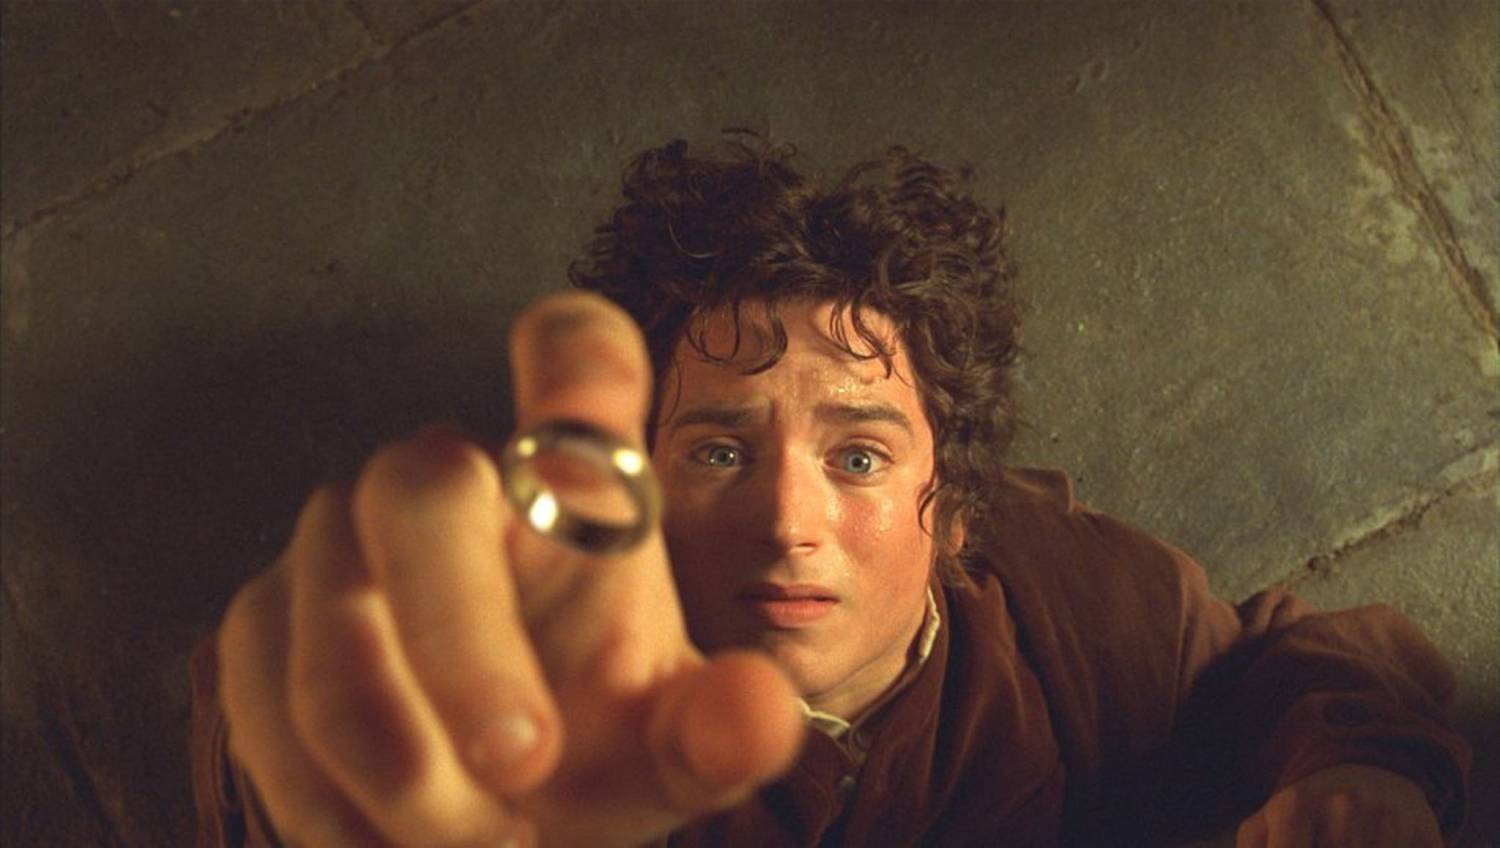 Elijah Wood in Lord of the Rings